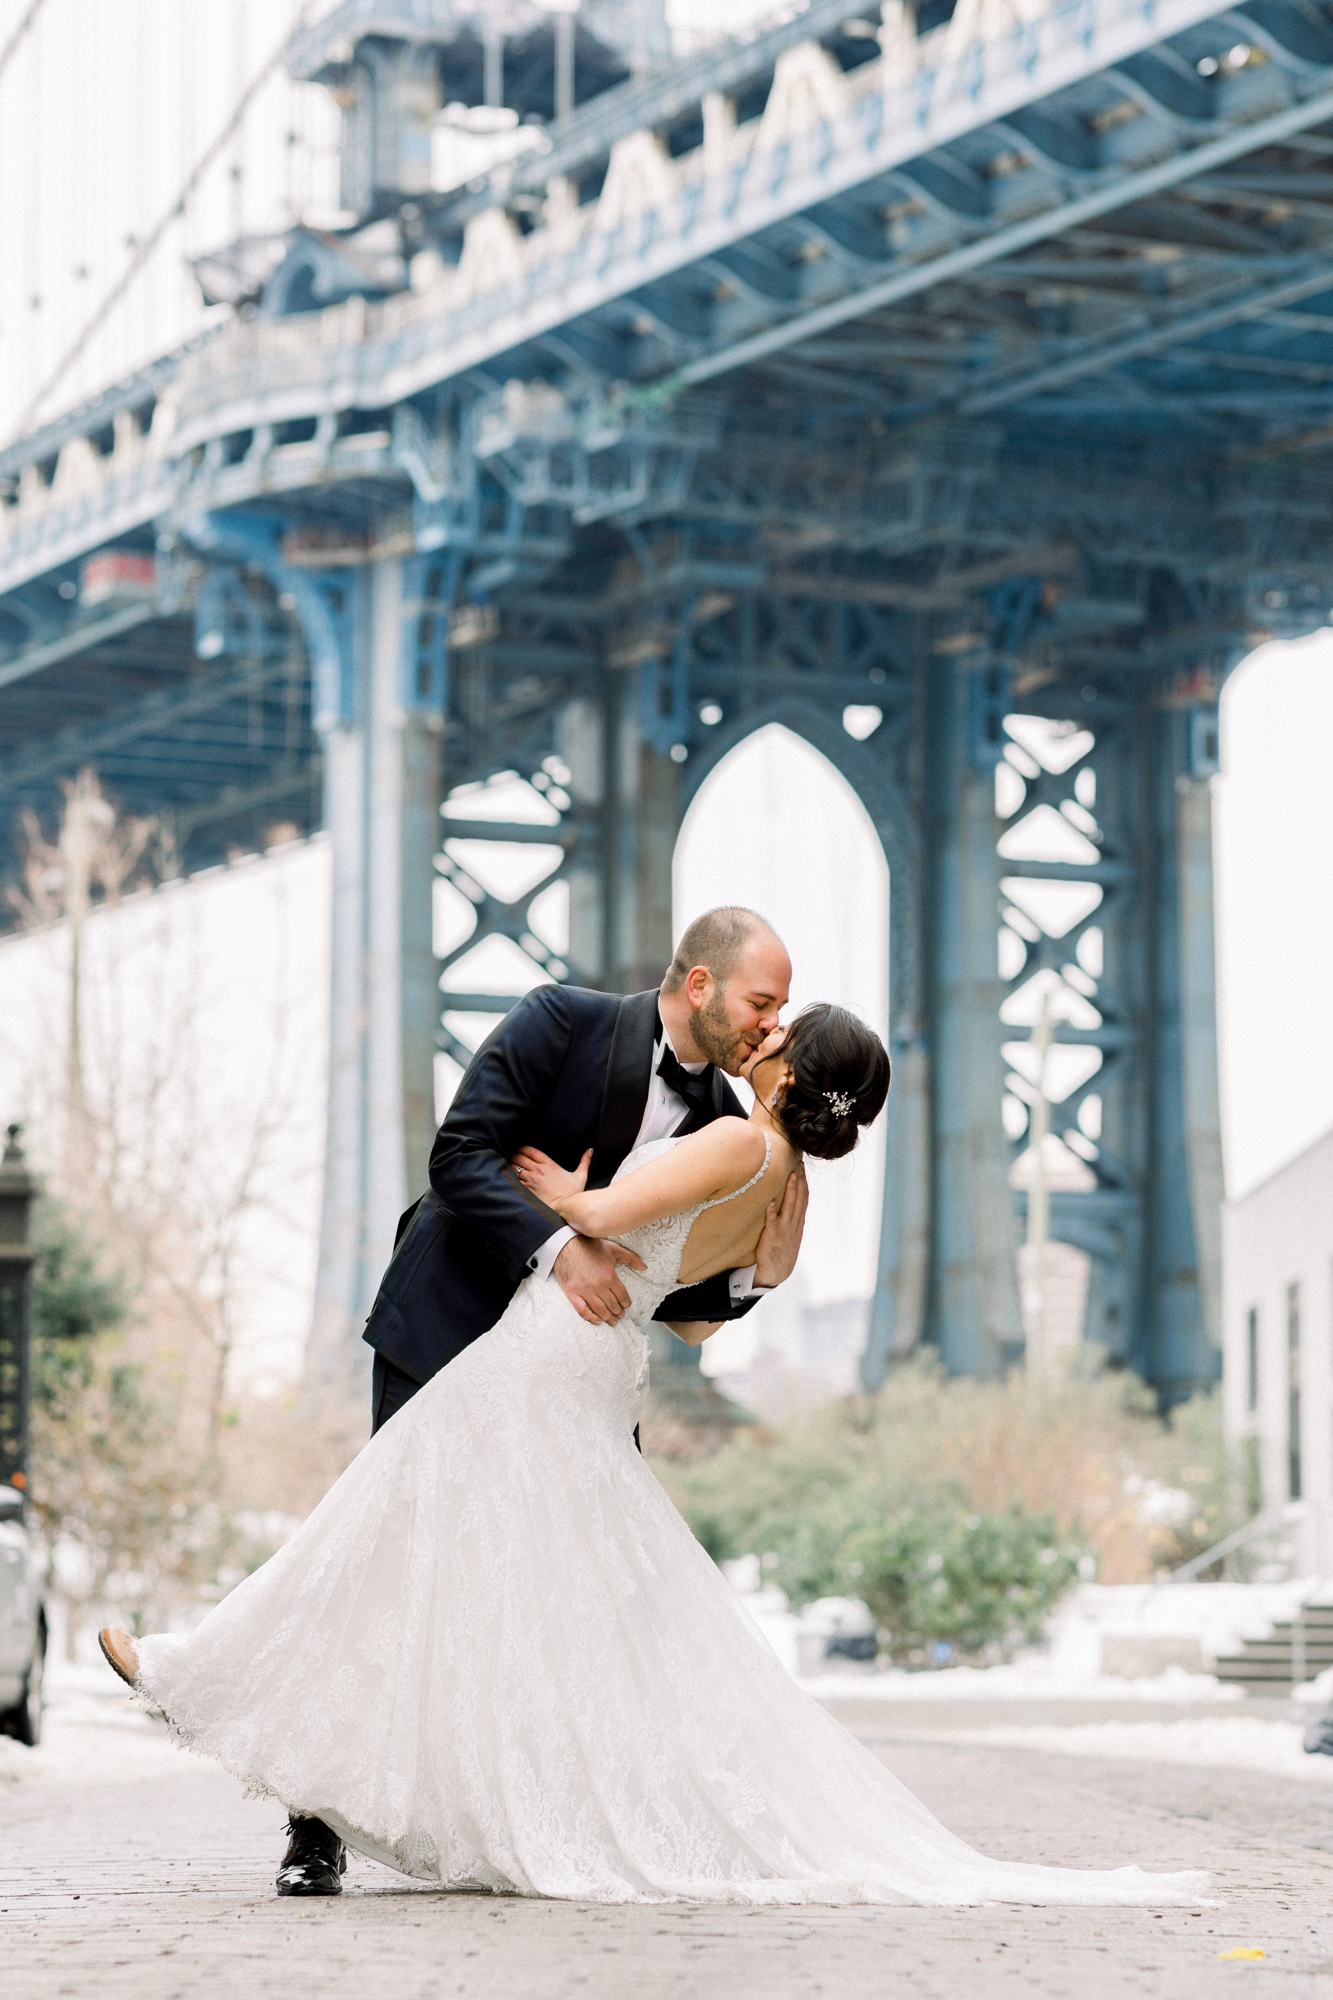 Dumbo wedding photos on Washington Street with Manhattan Bridge view